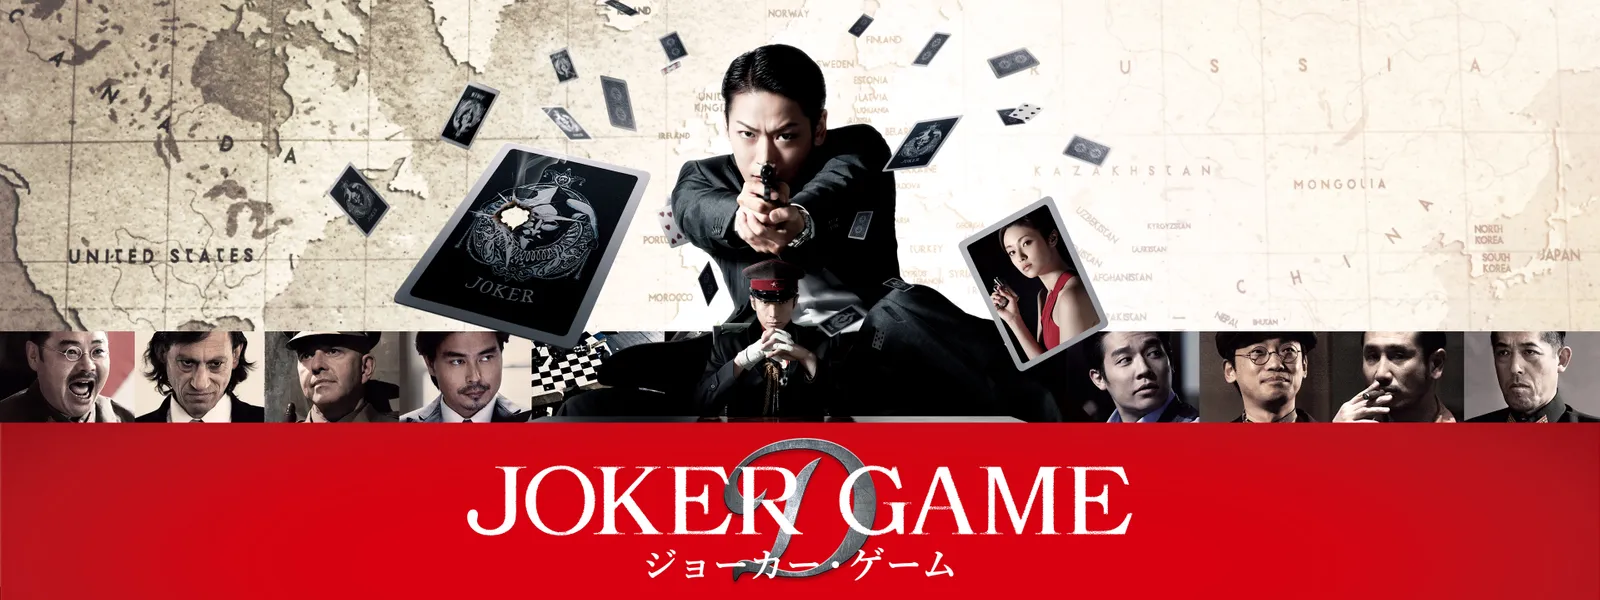 上 Joker Game 映画 最高の画像壁紙日本am